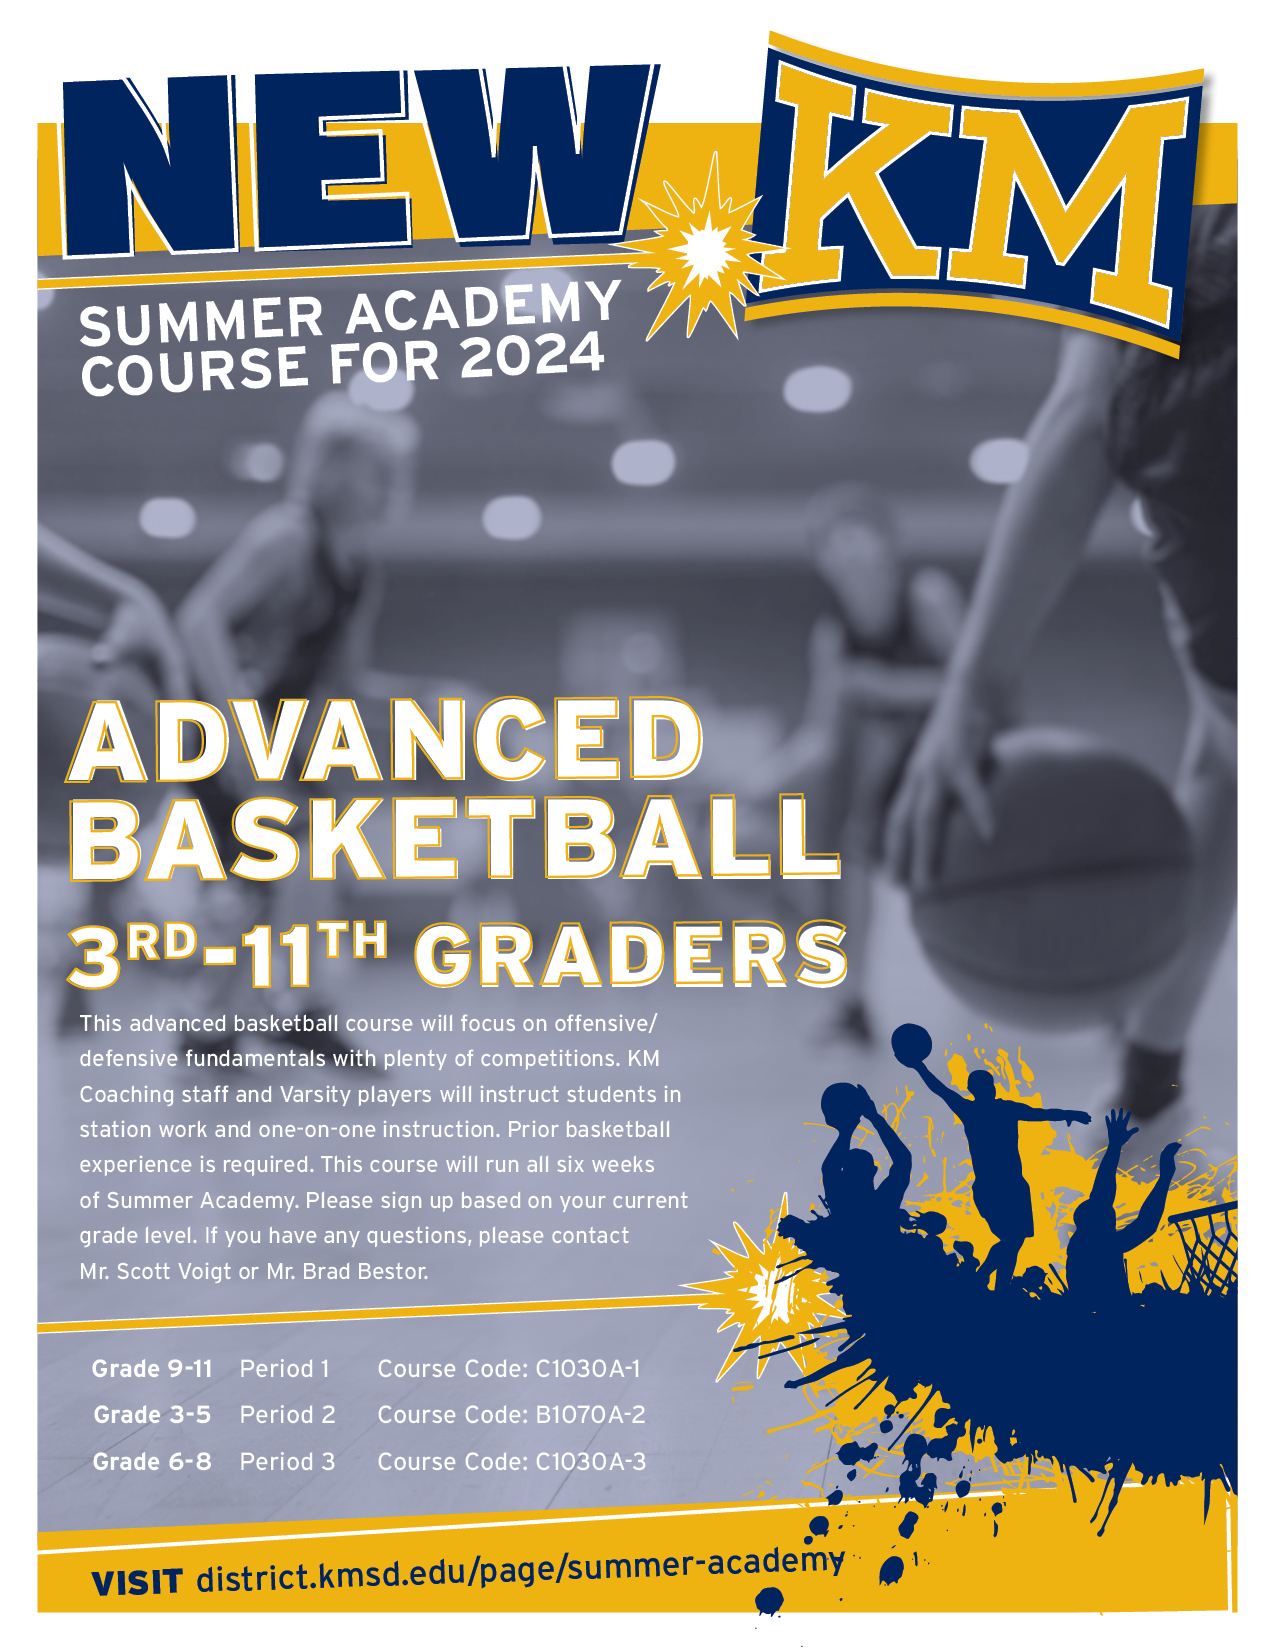 New Advanced Basketball Course